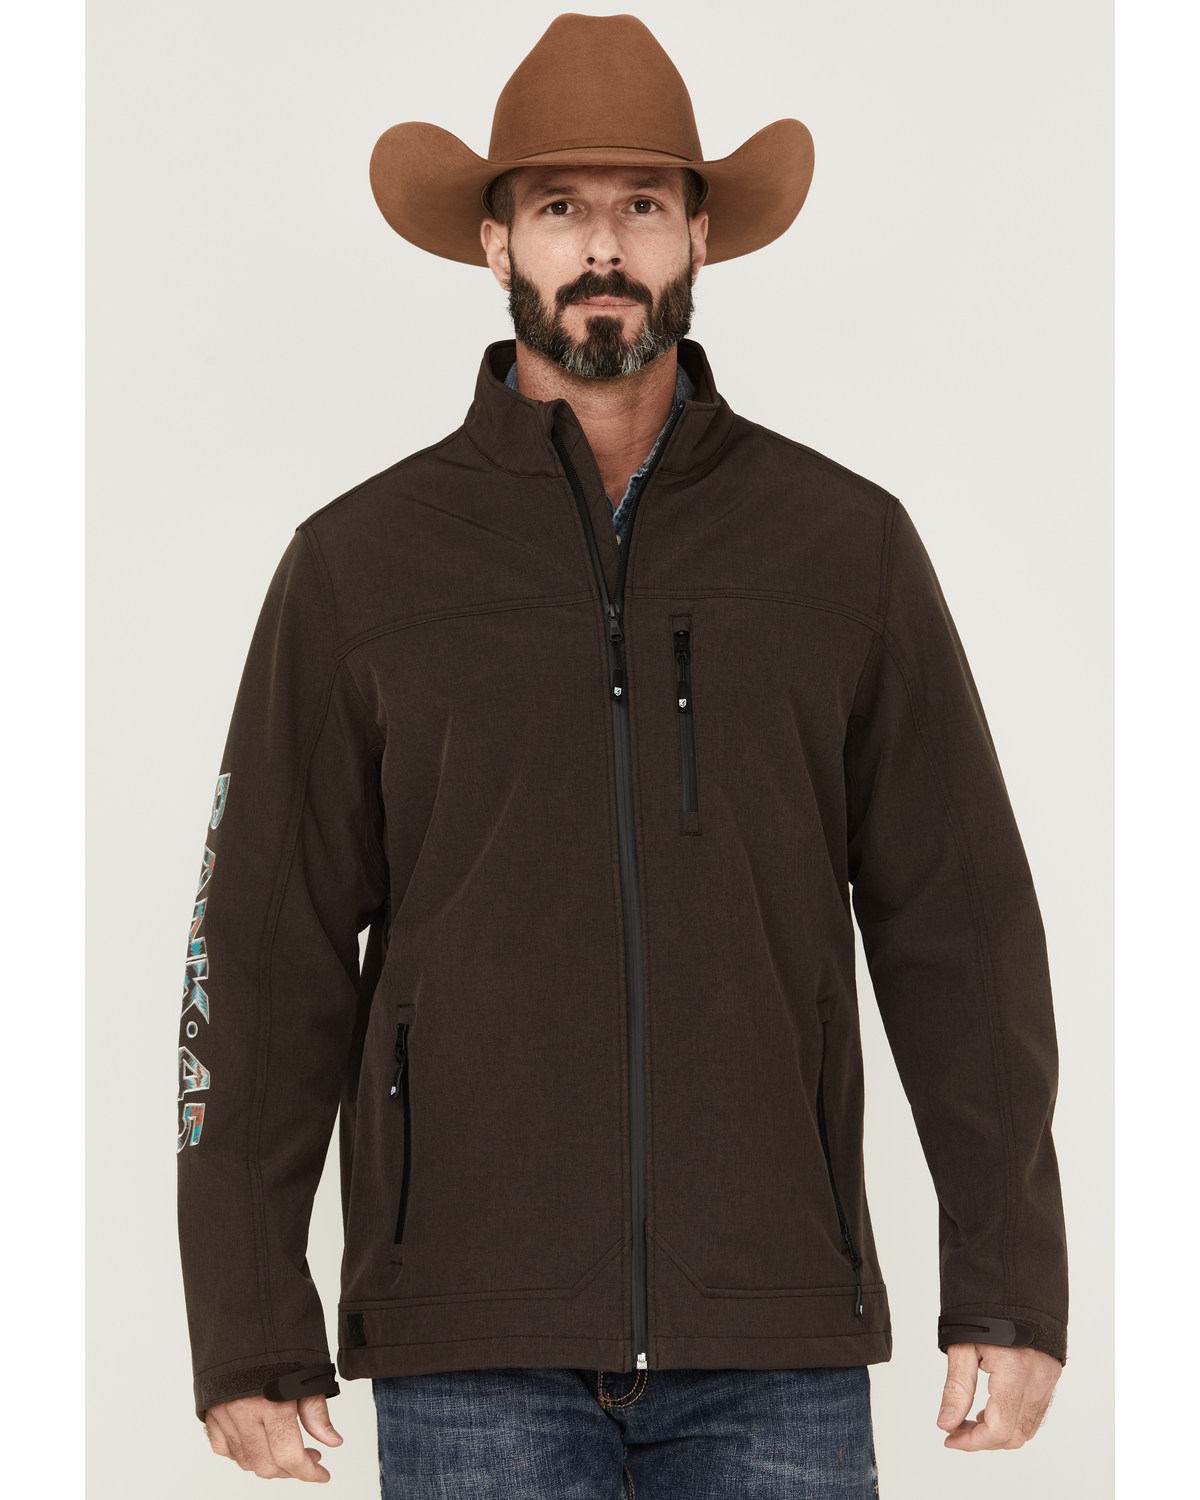 RANK 45® Men's Rodeo Southwestern Logo Sleeve Zip-Front Softshell Jacket